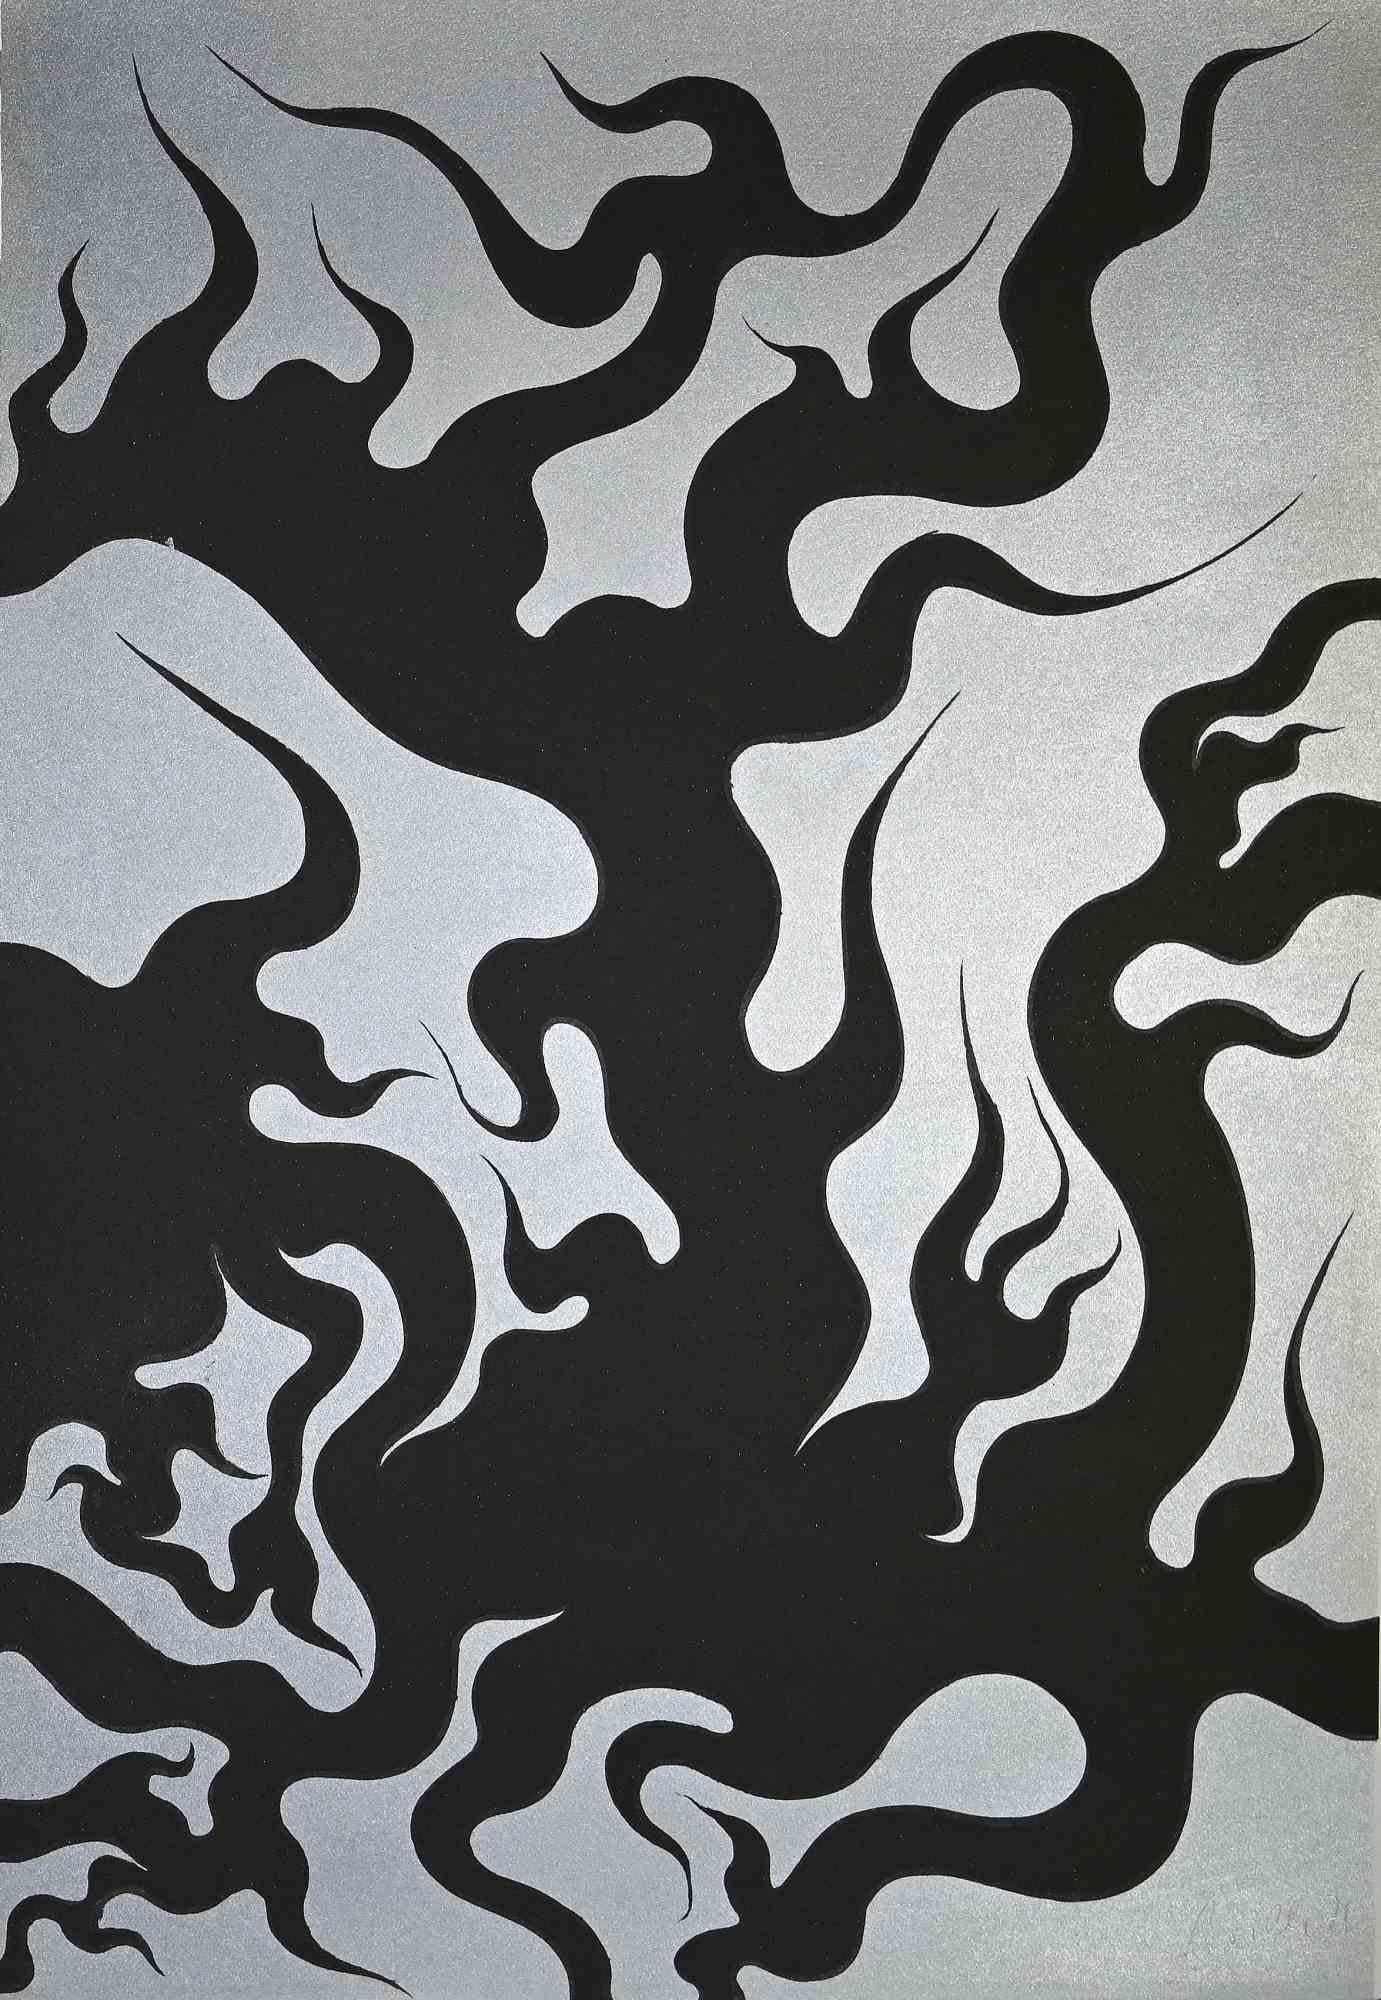 Luigi Boille Abstract Print - Composition - Screen Print by Luigi Boiille - 1971